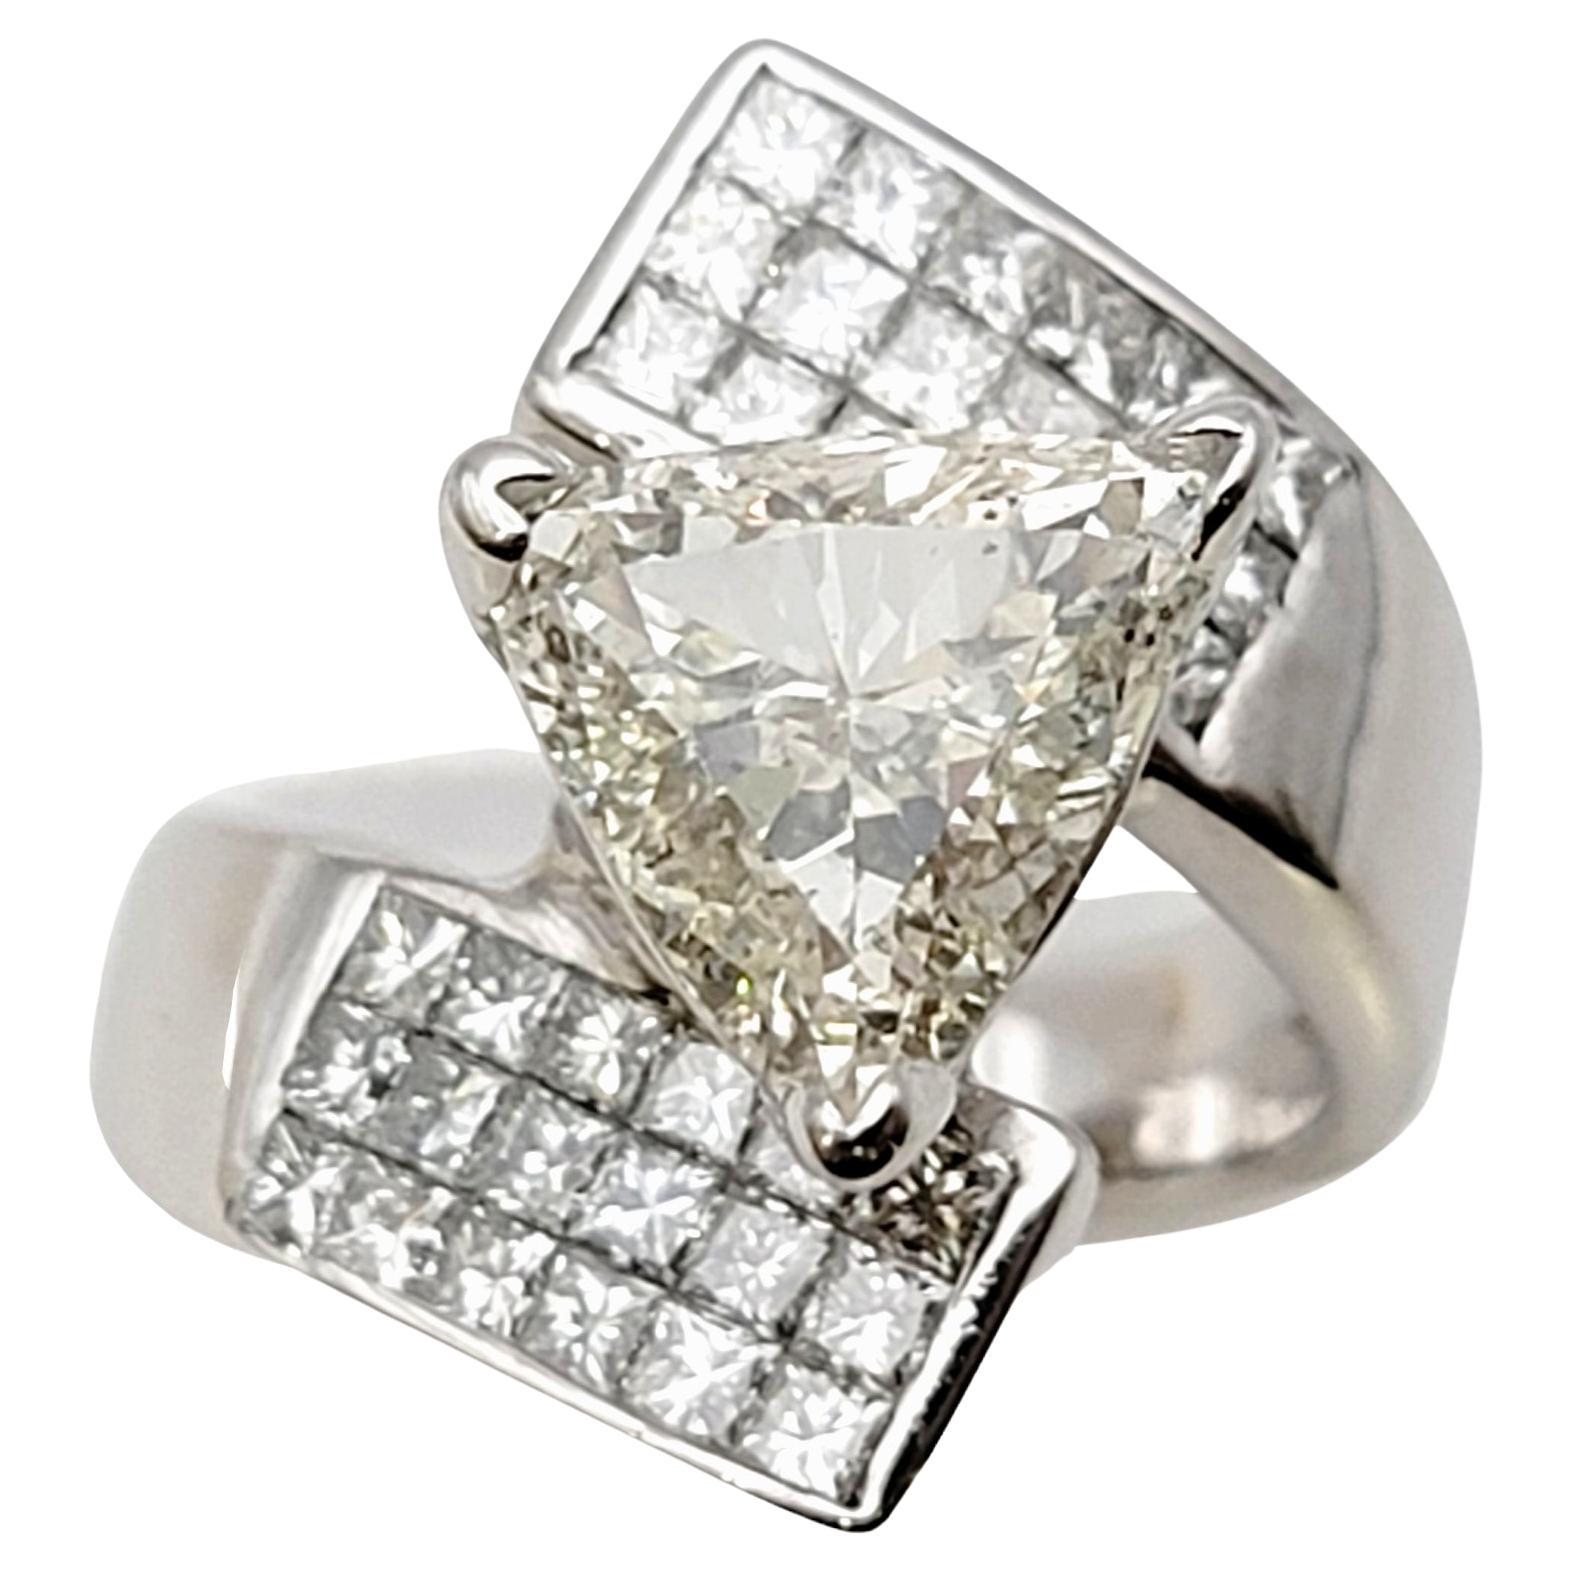 Trillion Cut Diamond Ring with Princess Cut Diamond Bypass White Gold Band